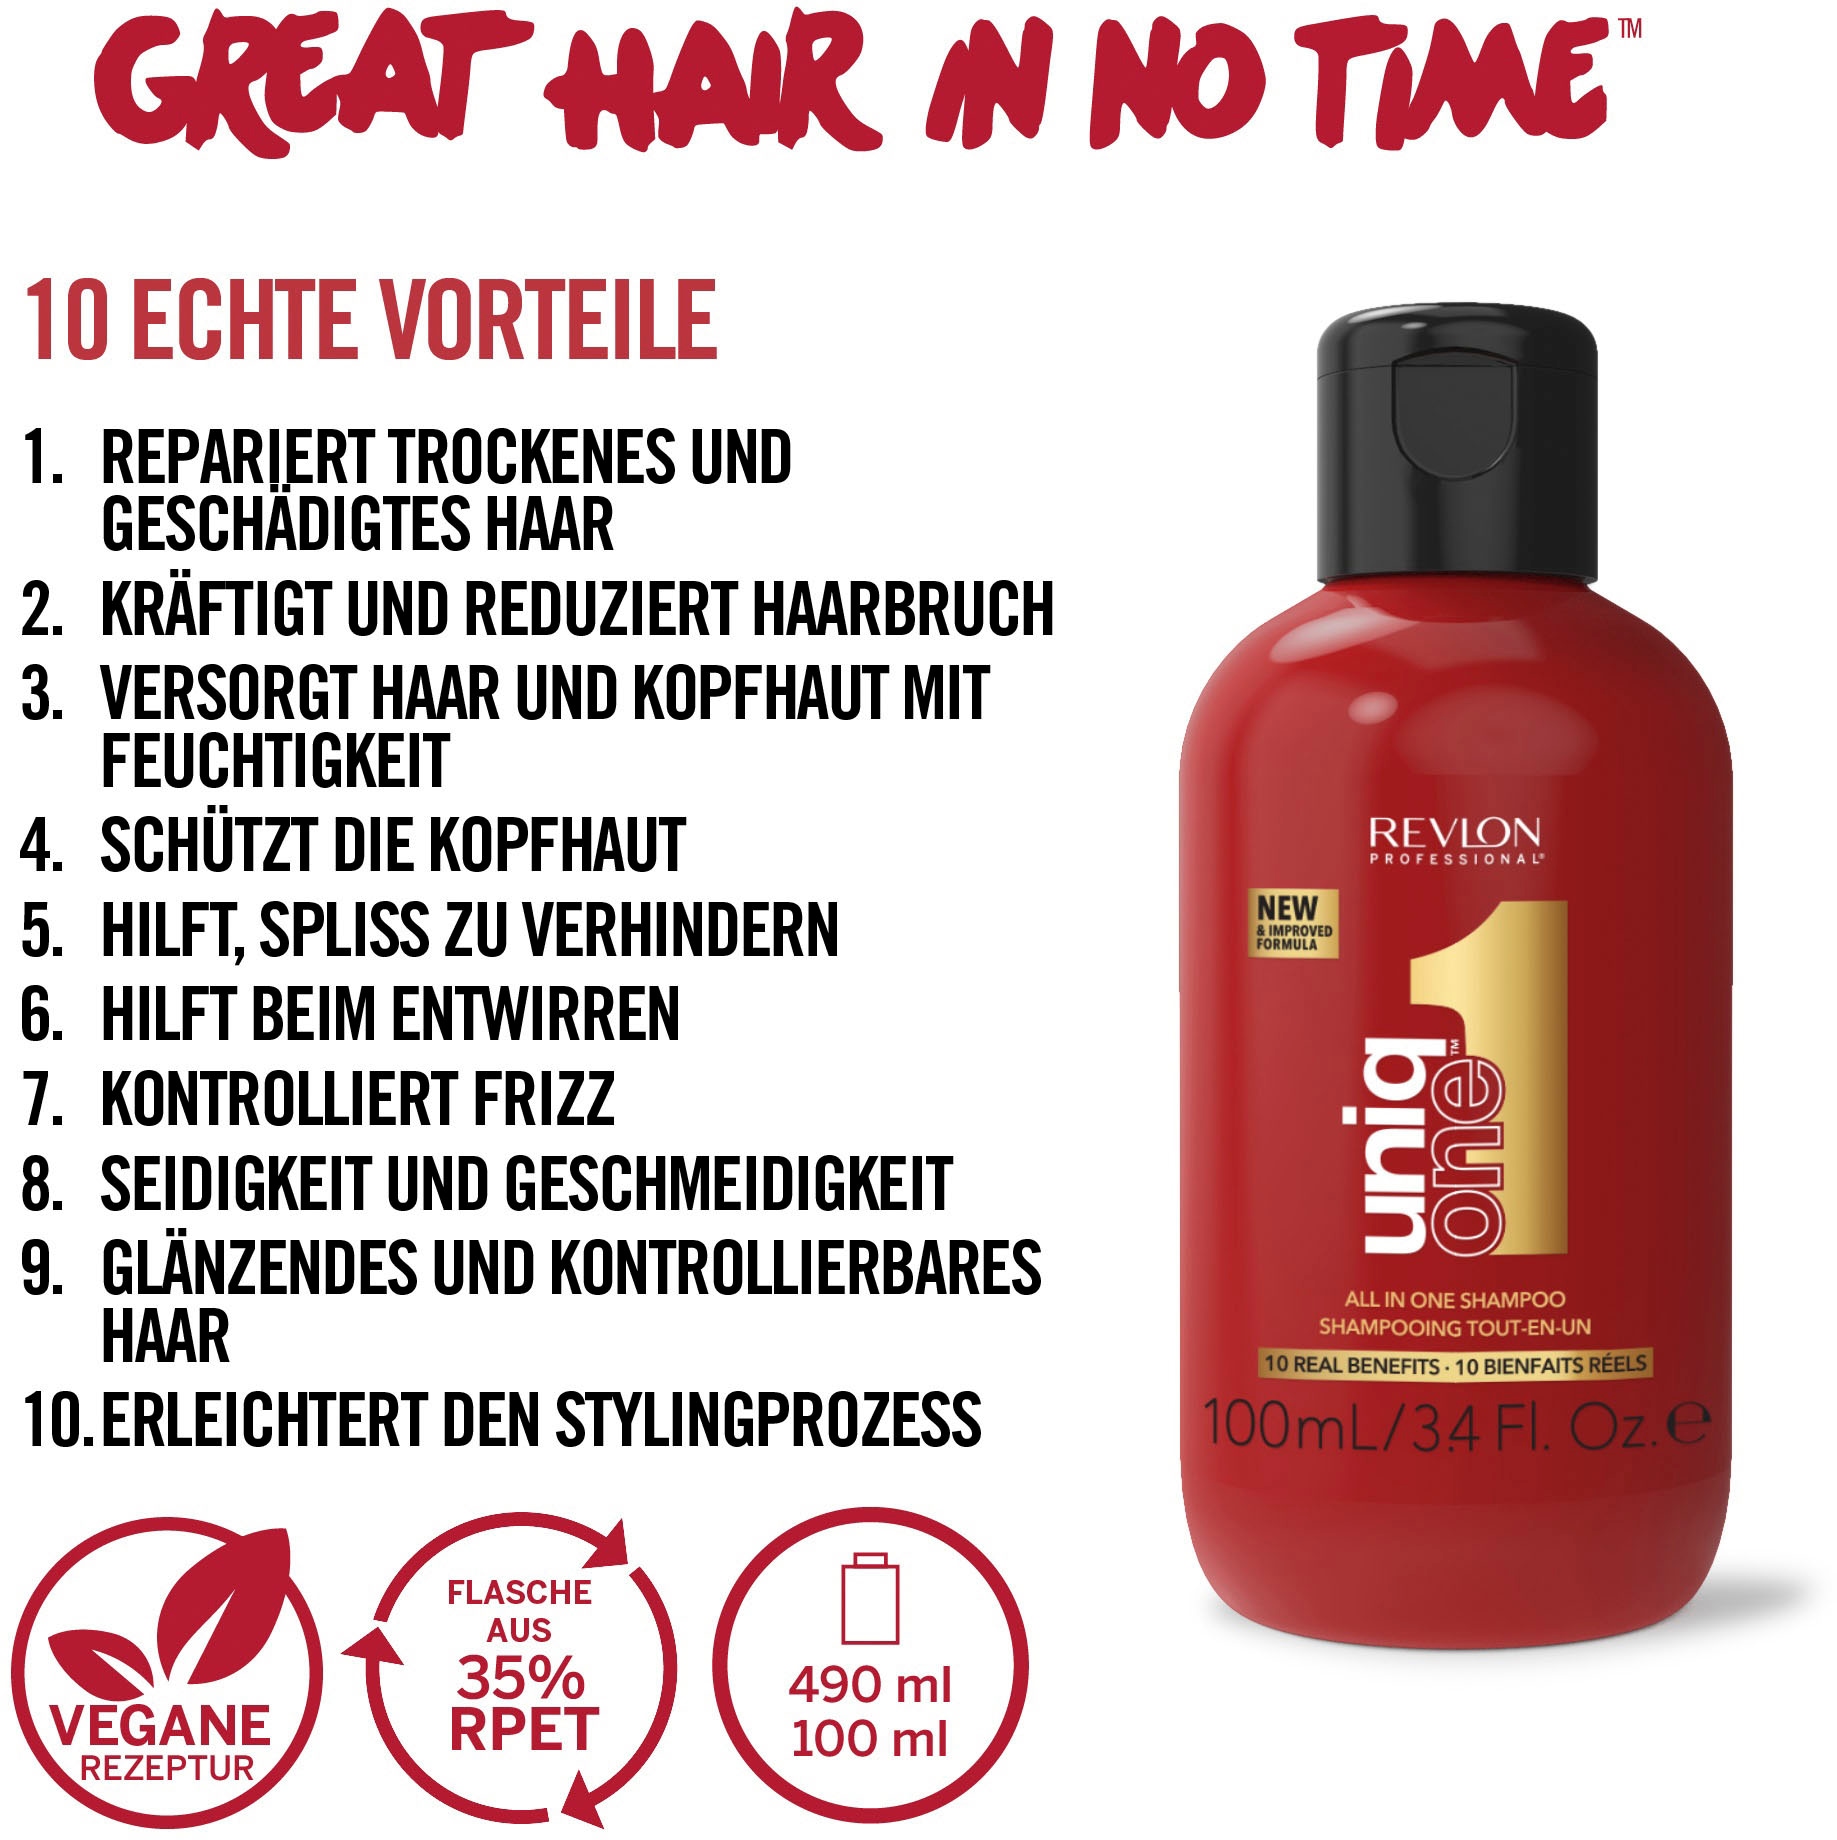 Care OTTO All 250 One Shop Set Hair im Great Online Haarpflege-Set »Uniqone ml« In REVLON PROFESSIONAL